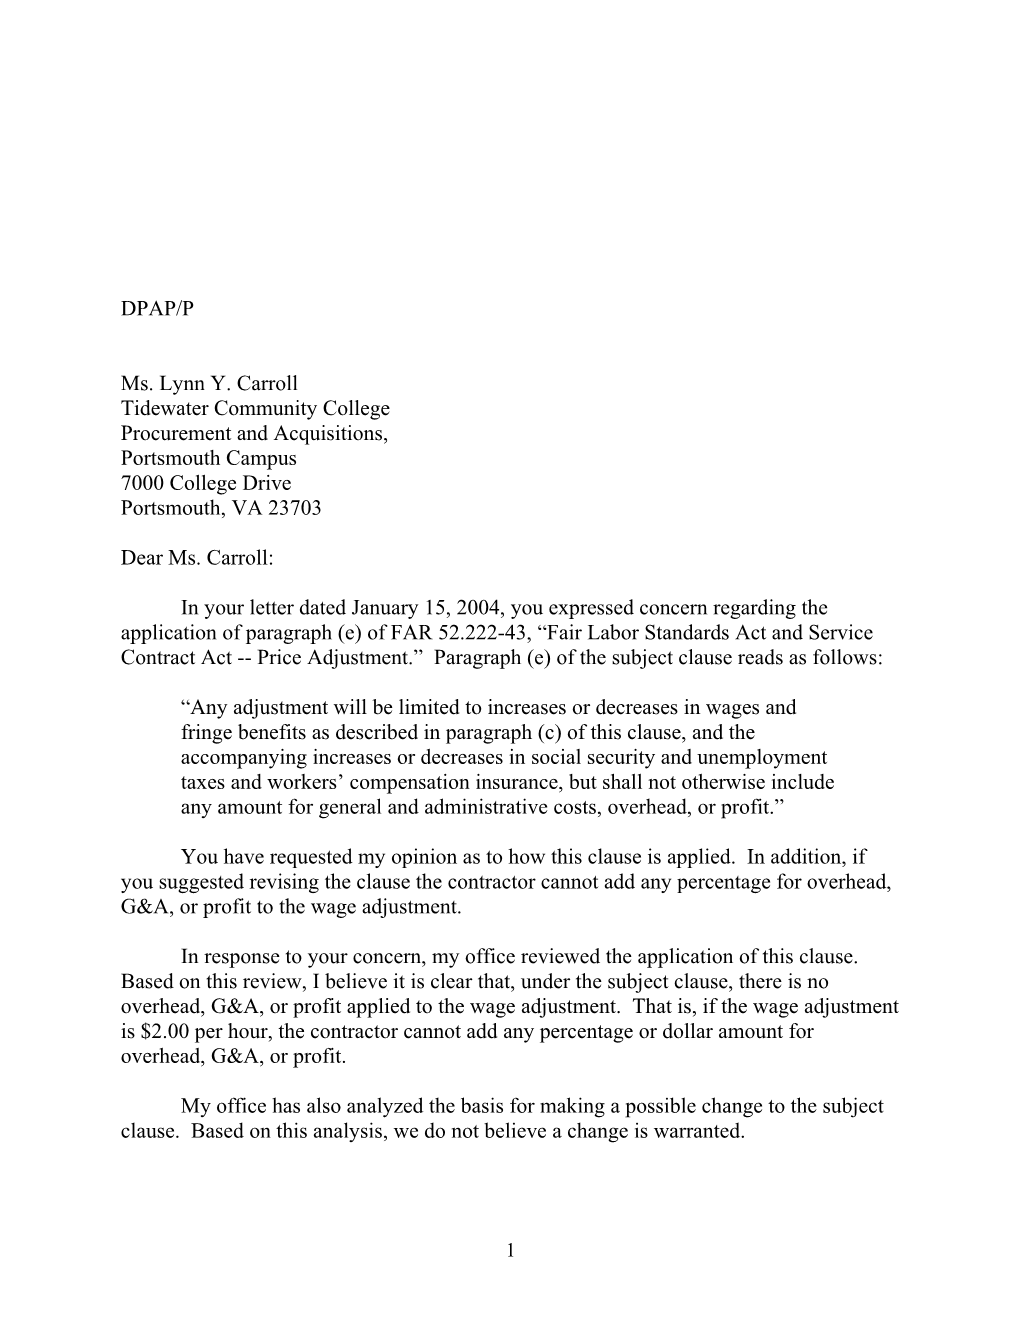 Letter to Ms. Lynn Y. Carroll - 2004-0414-DPAP